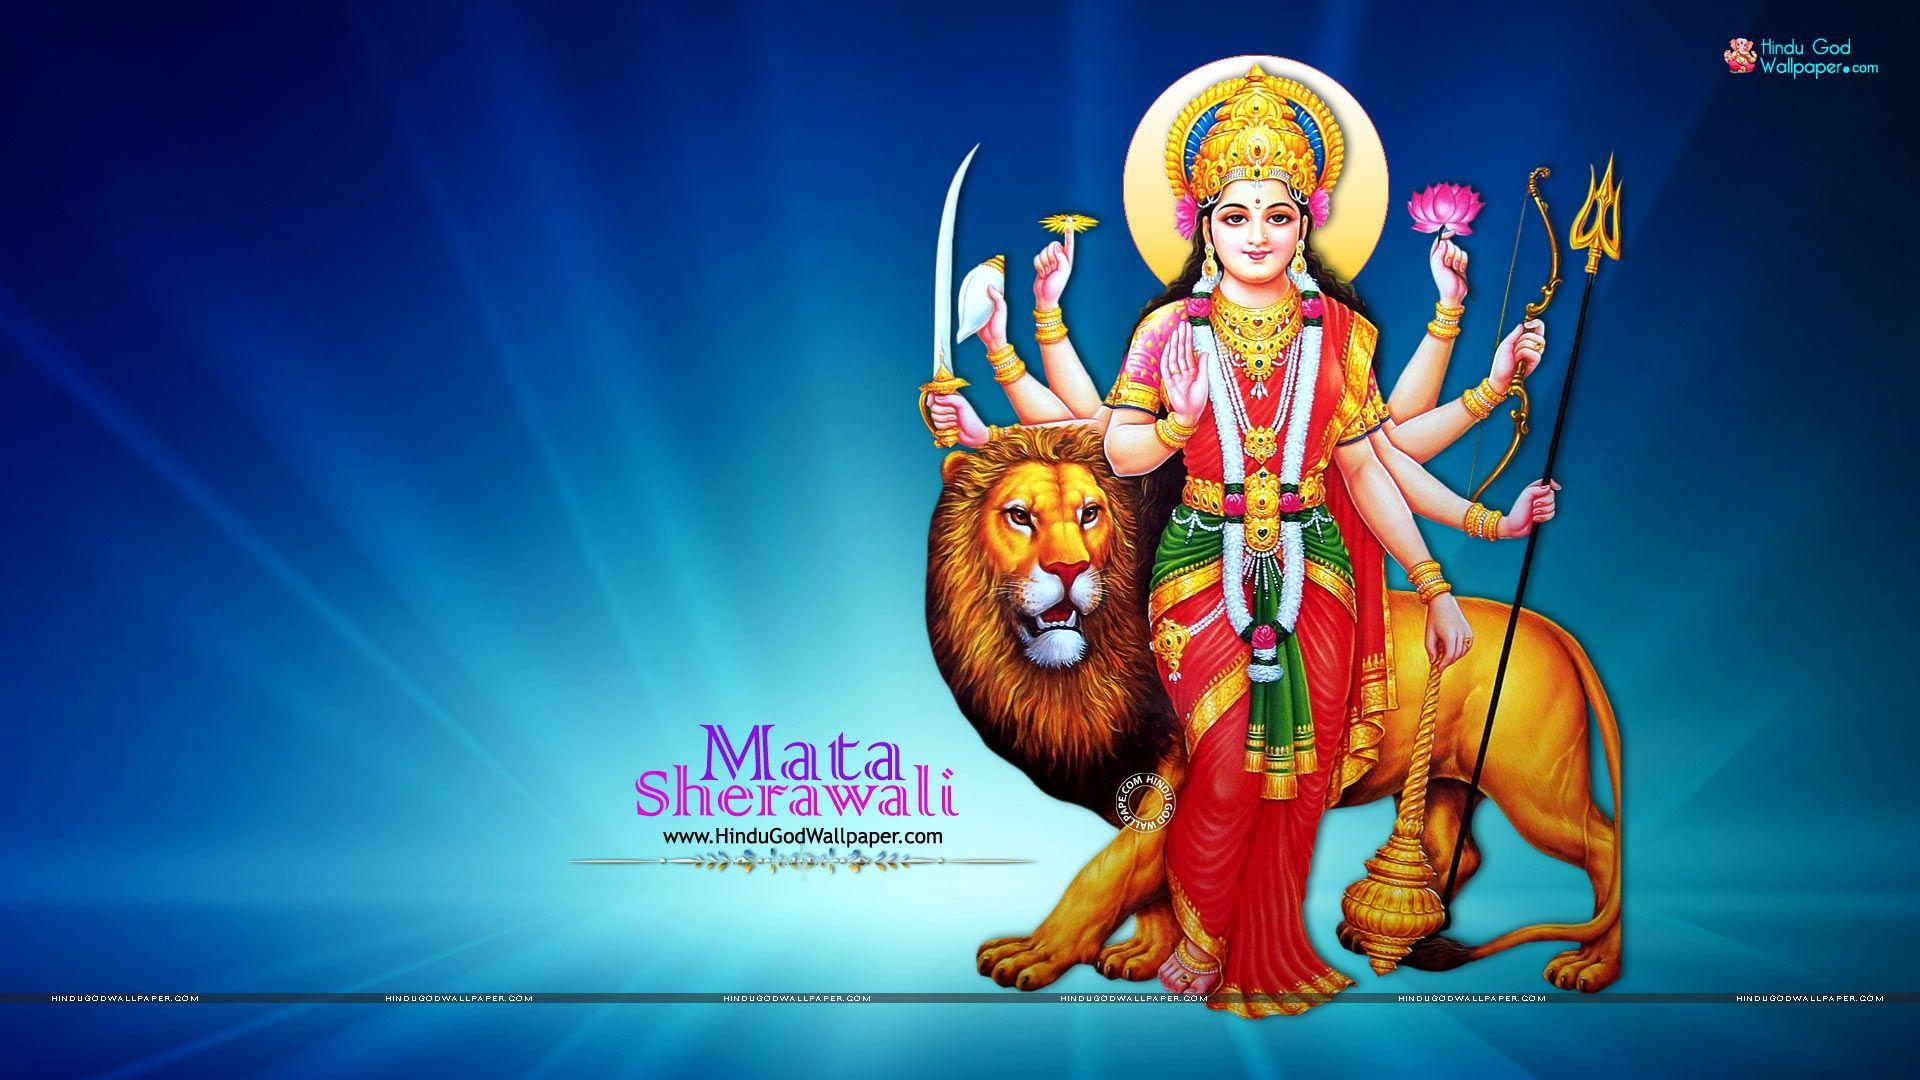 Sherawali Mata Durga Wallpaper HD Full Size Download. HD